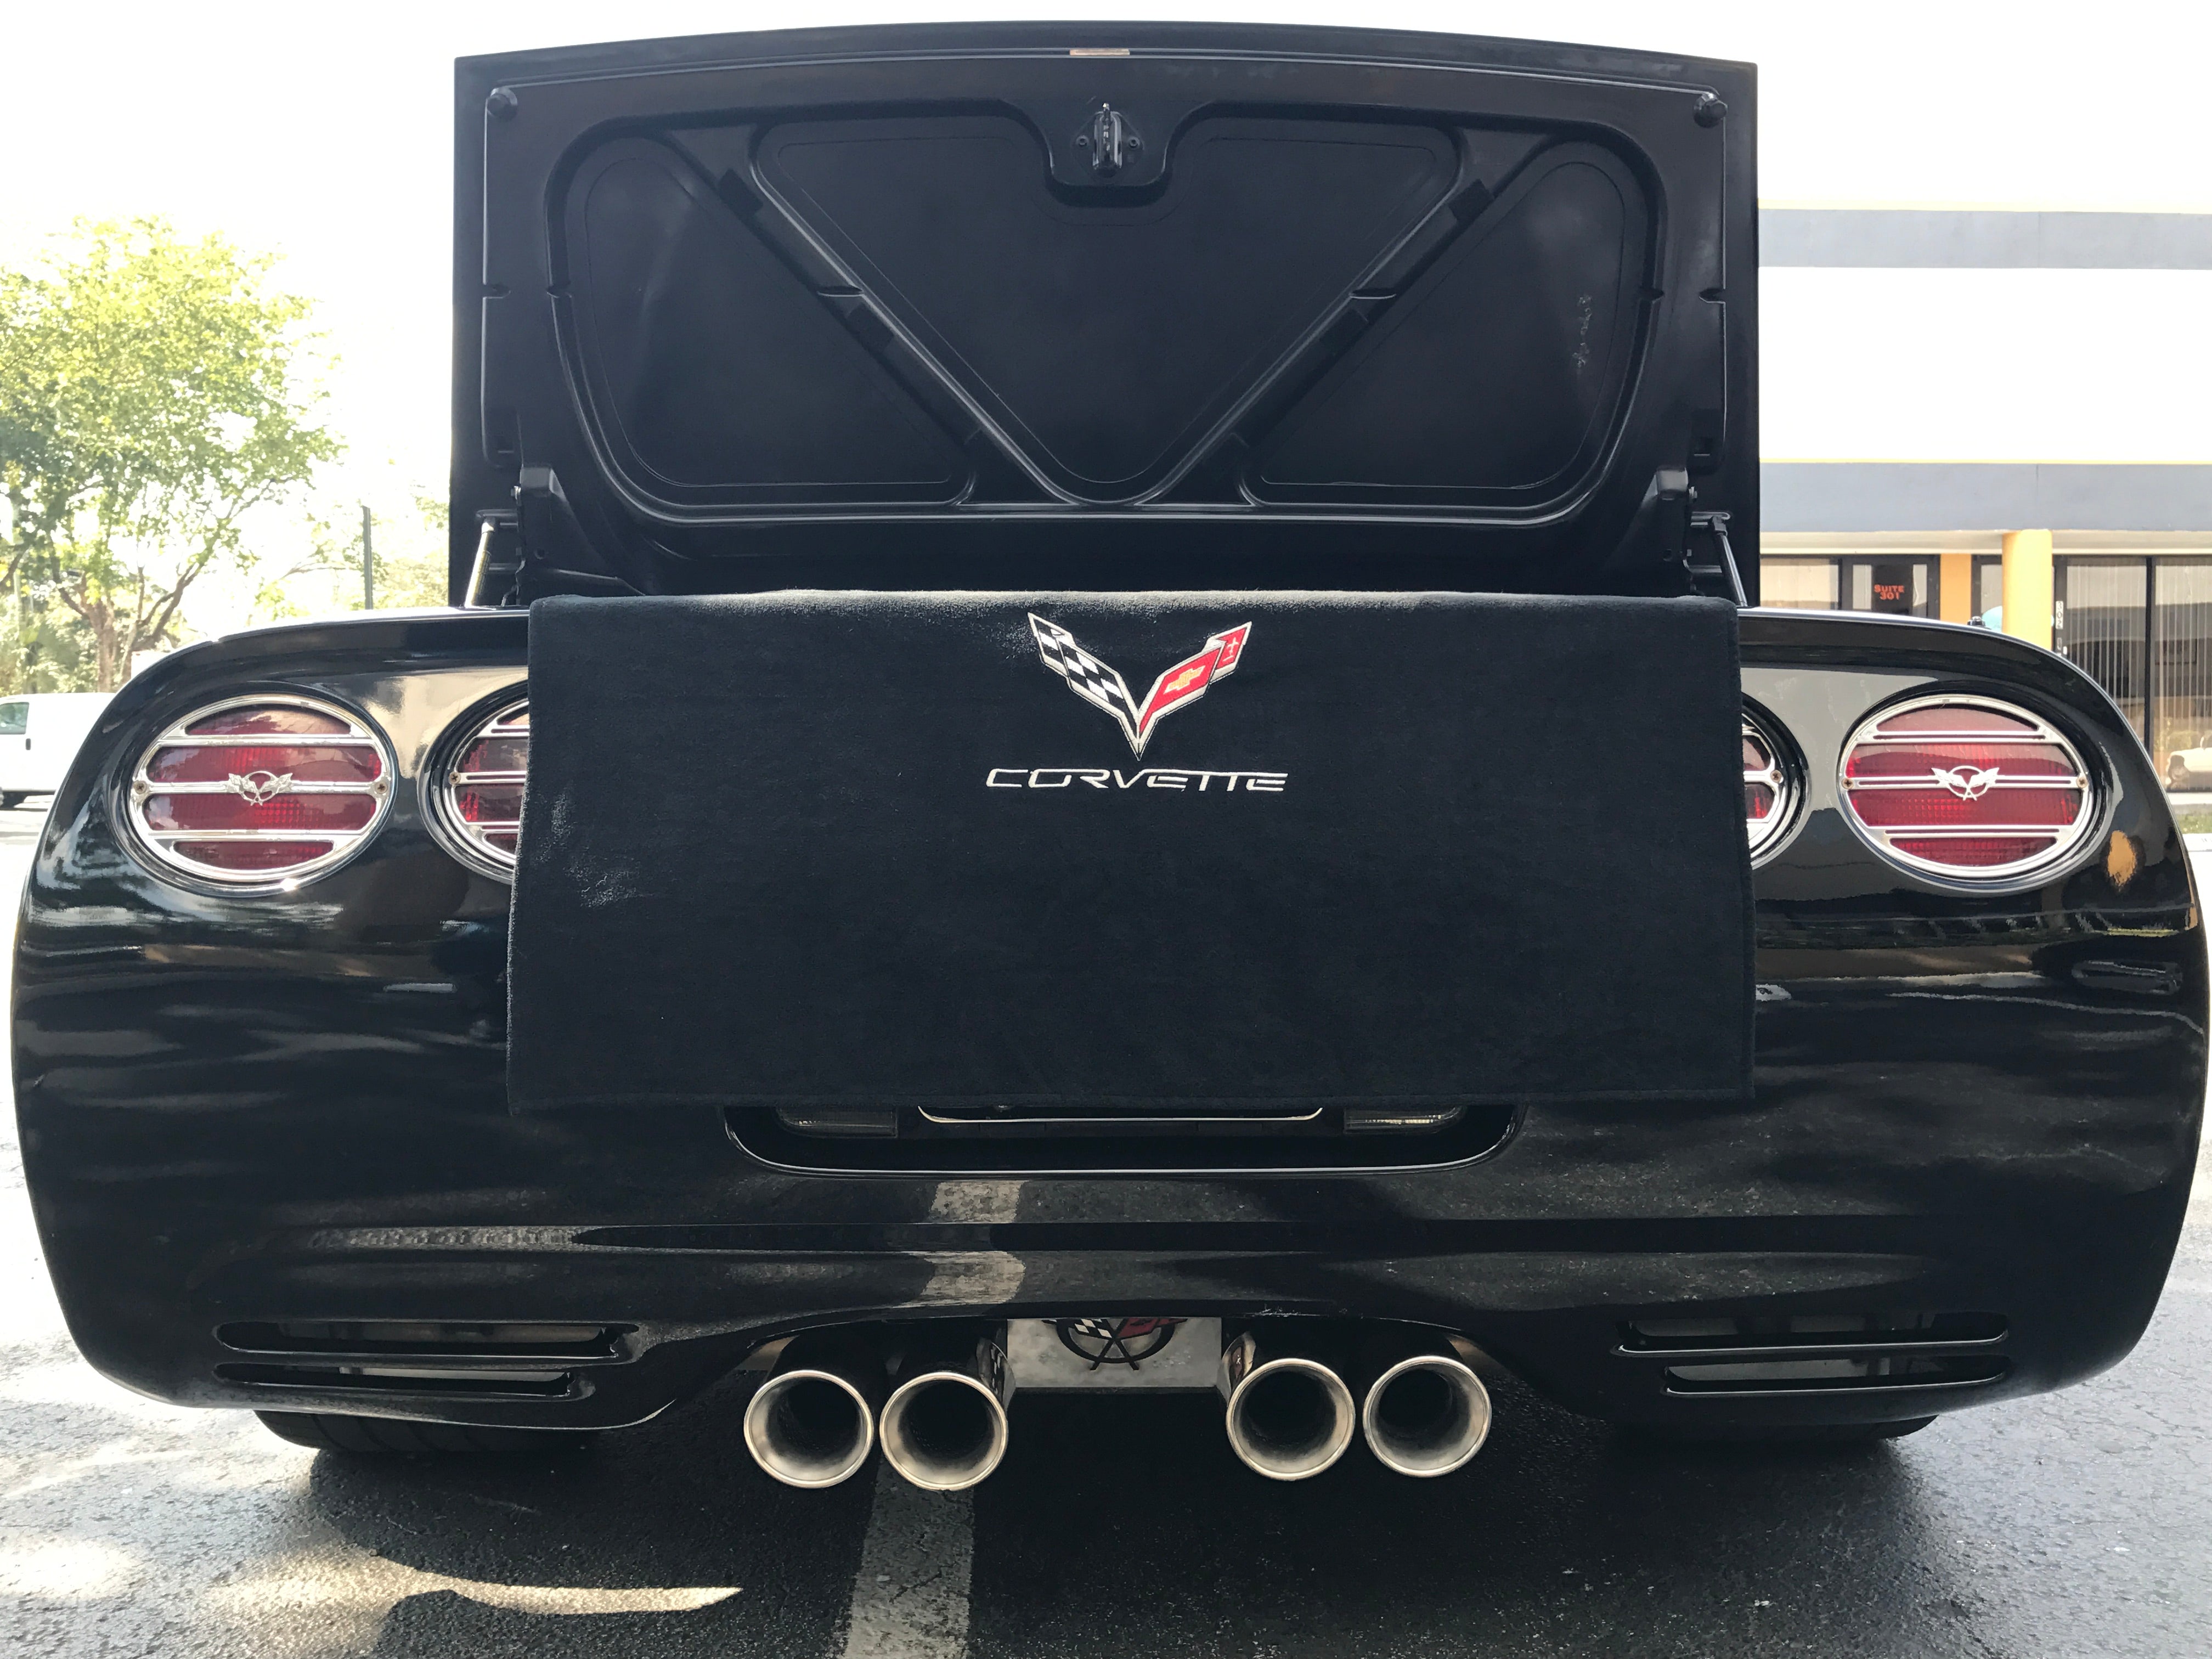 C7 Corvette Trunk Towel (2014-2019)